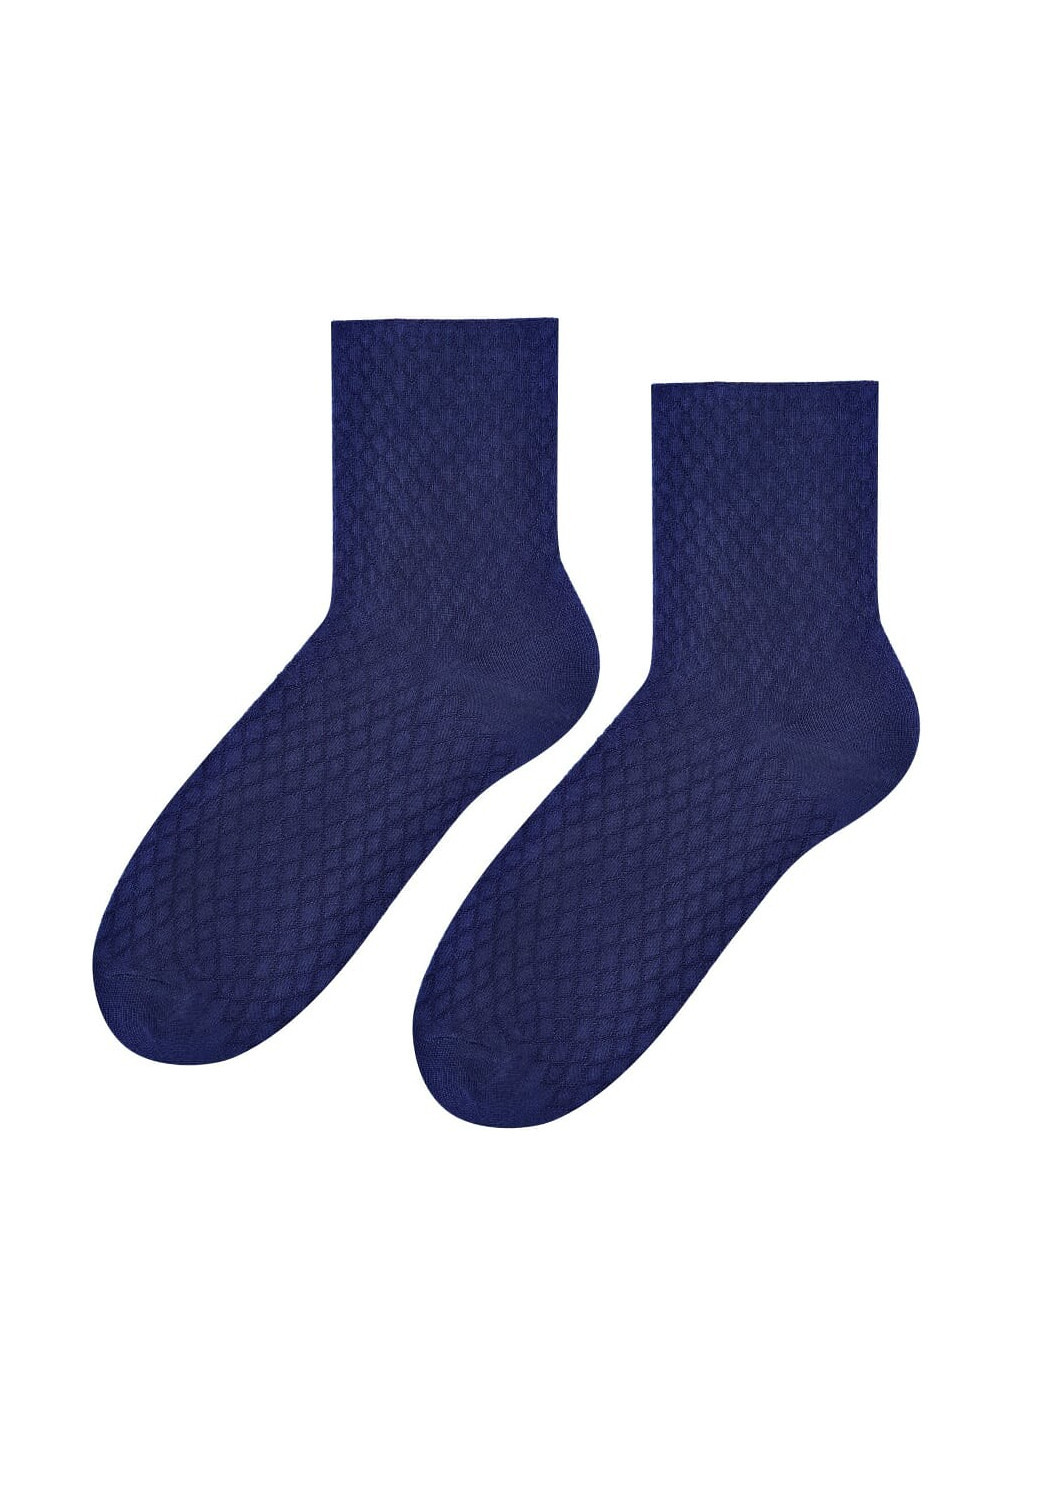 Dámské vzorované ponožky Steven Bamboo art.125 tmavě modrá 35-37